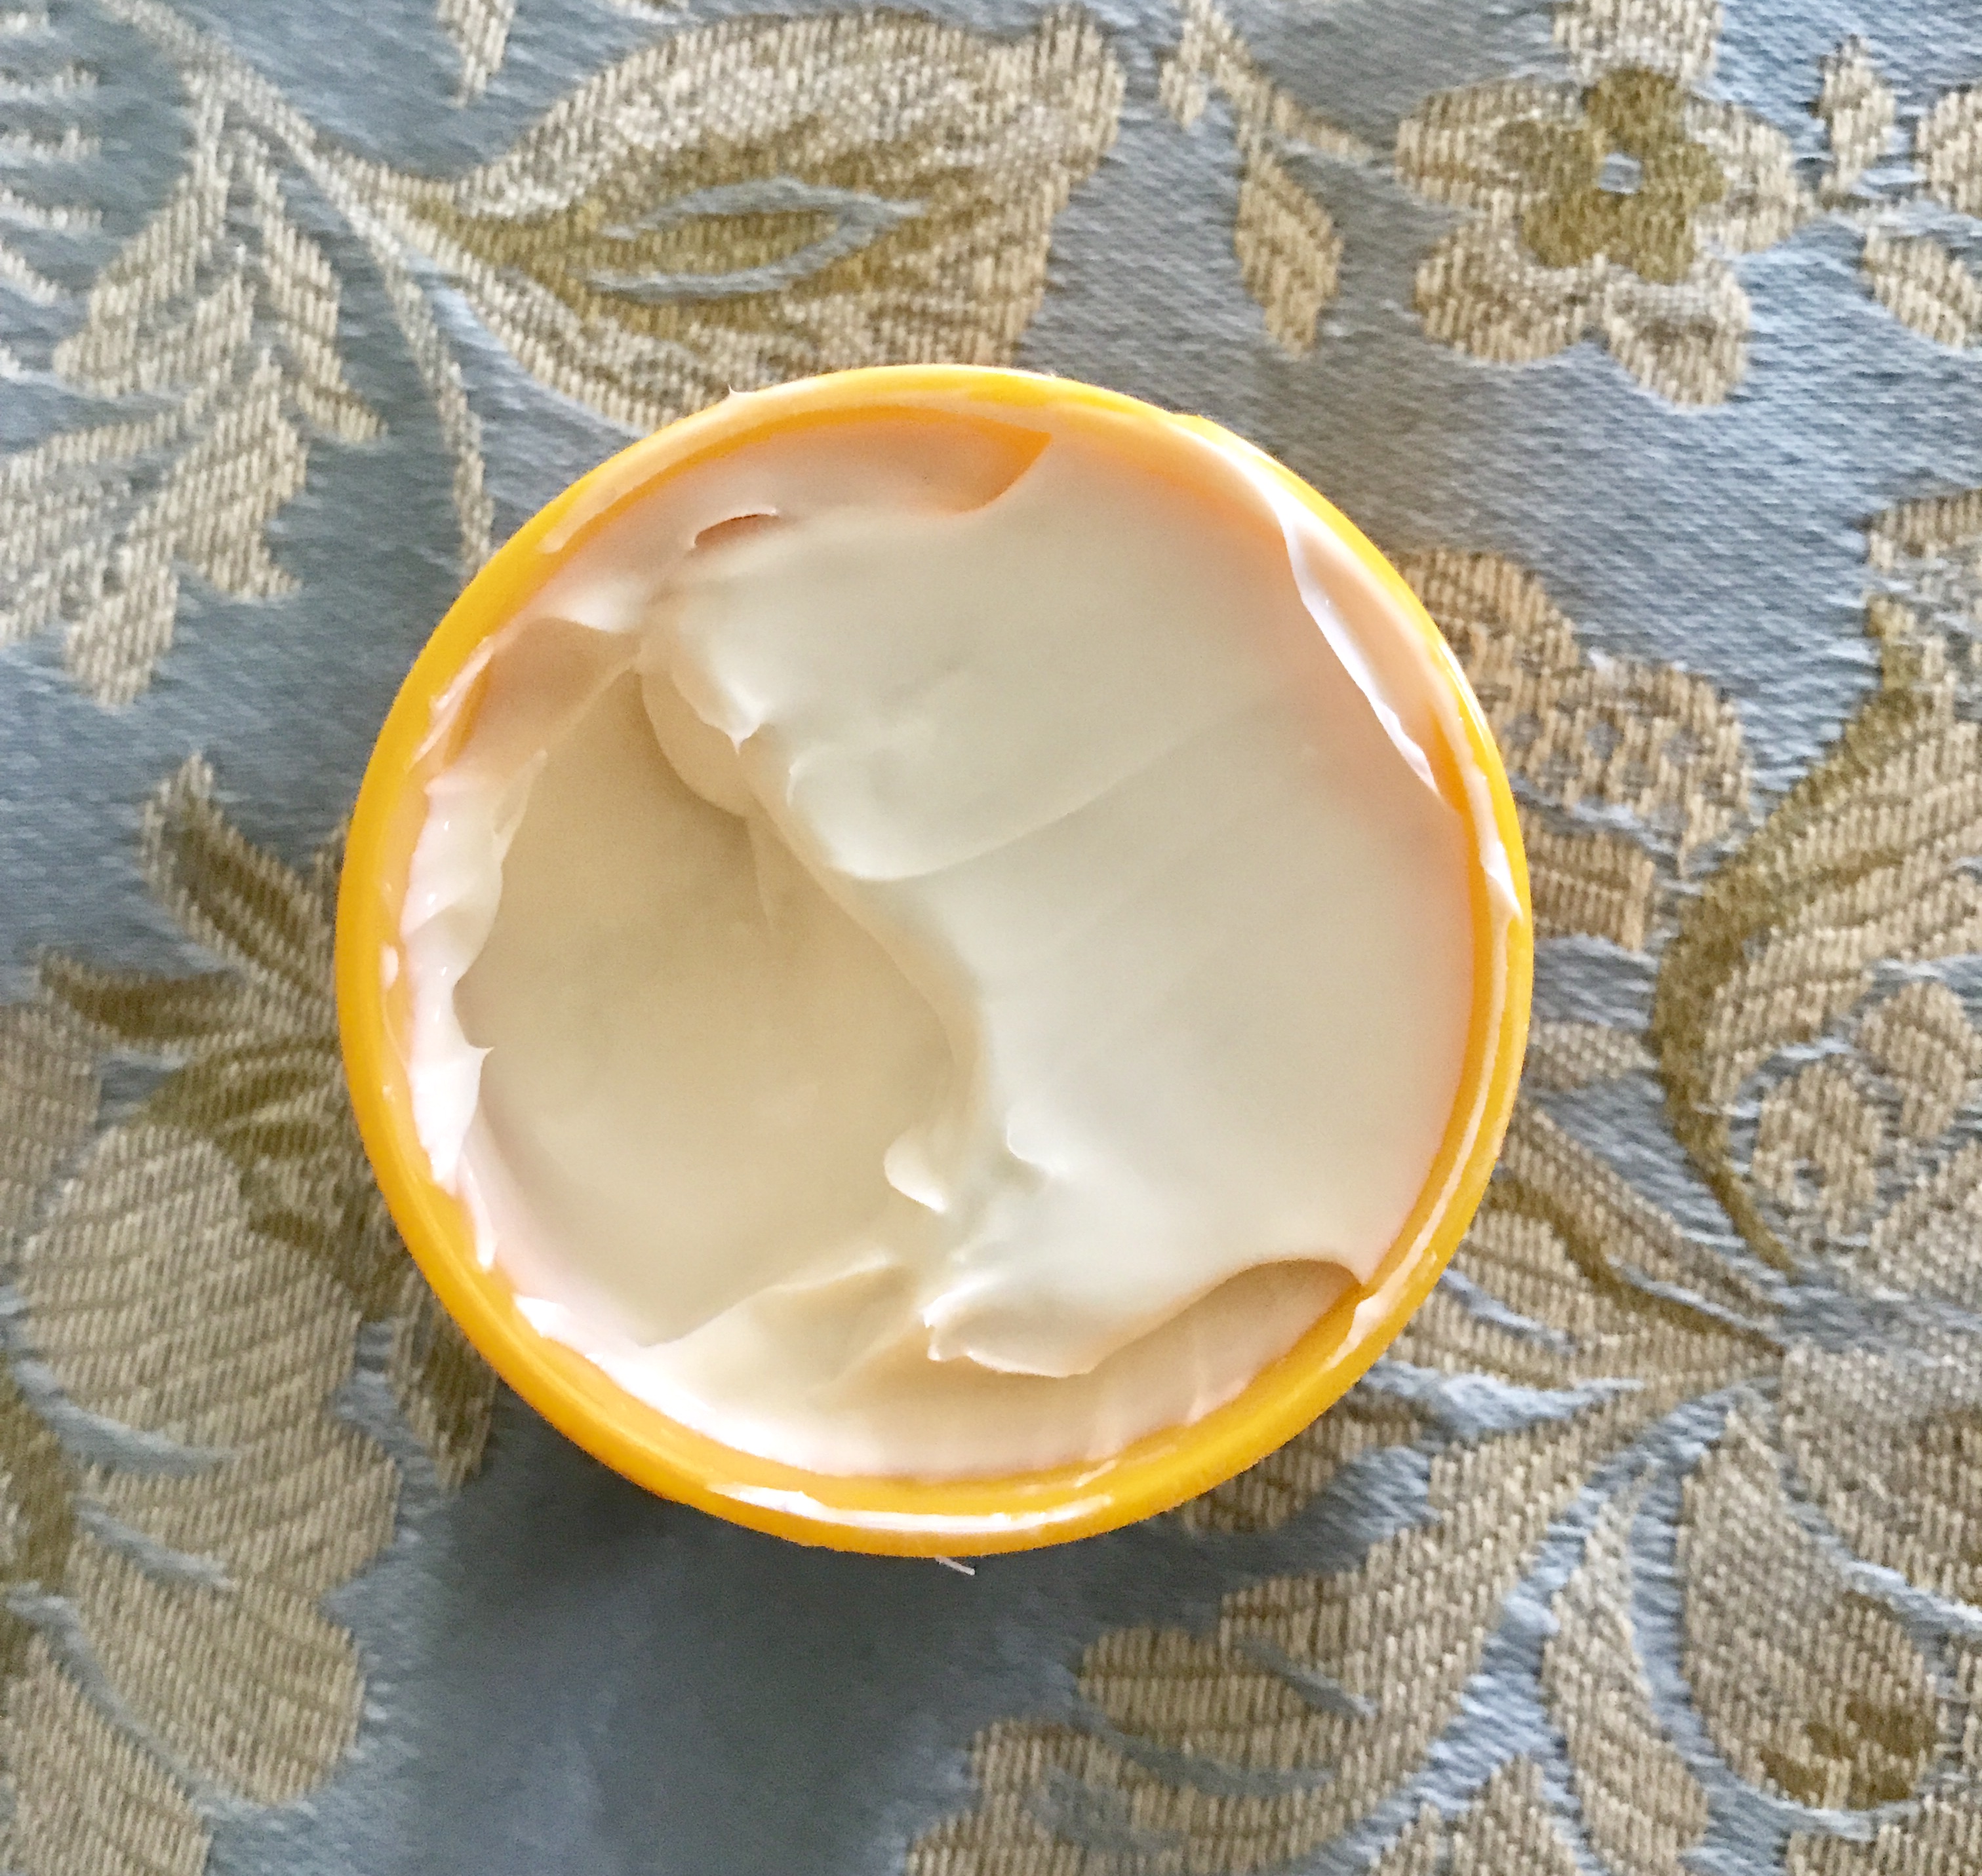 open jar of Sol de Janeiro Bum Bum Cream showing the thick off-white body cream, neversaydiebeauty.com